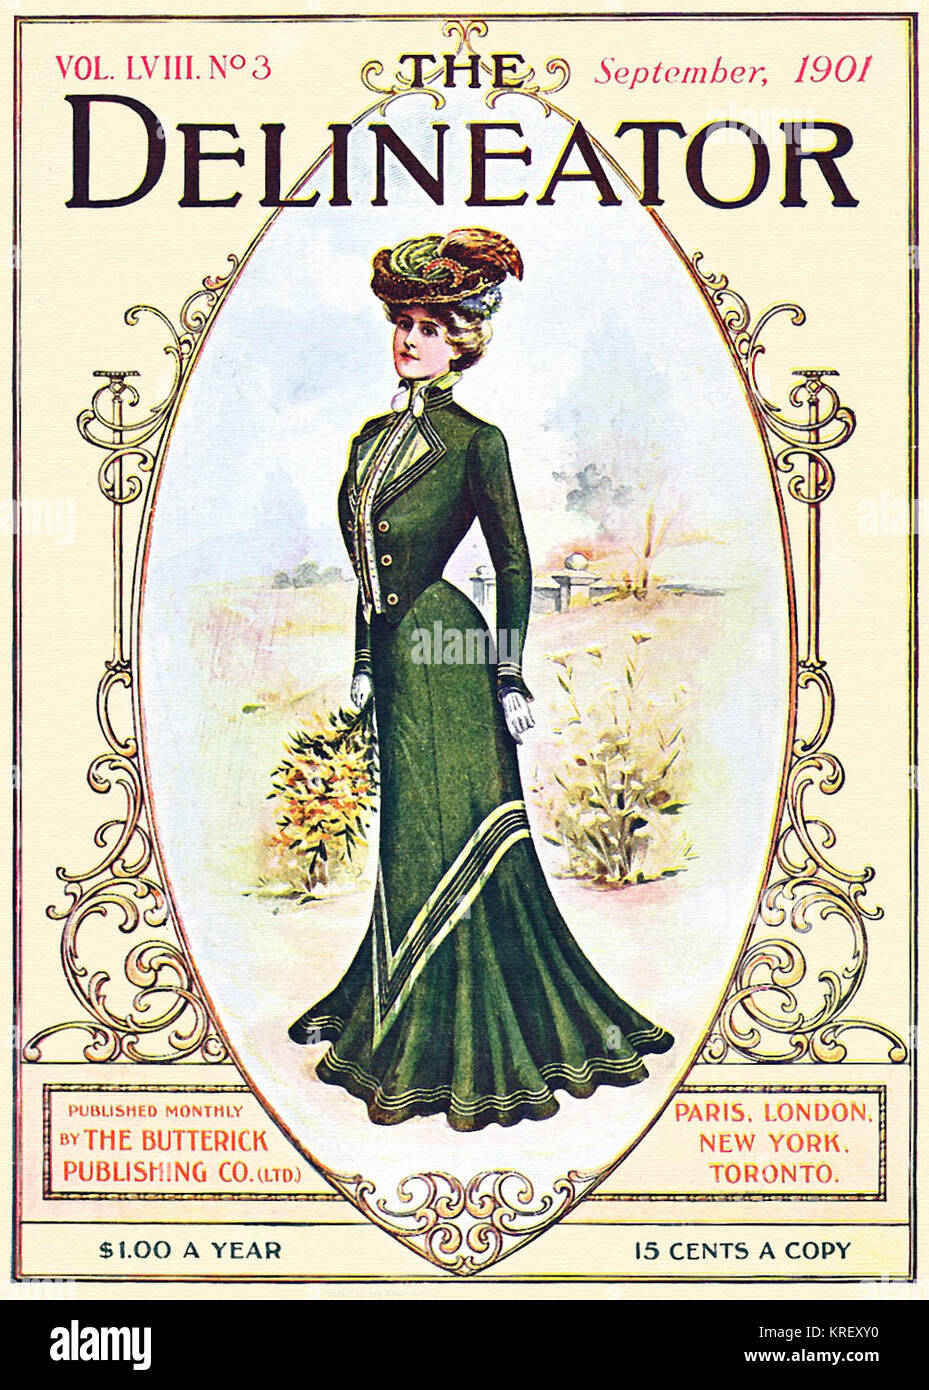 Delineator, September 1901 Edwardian Lady's Fashion Stock Photo